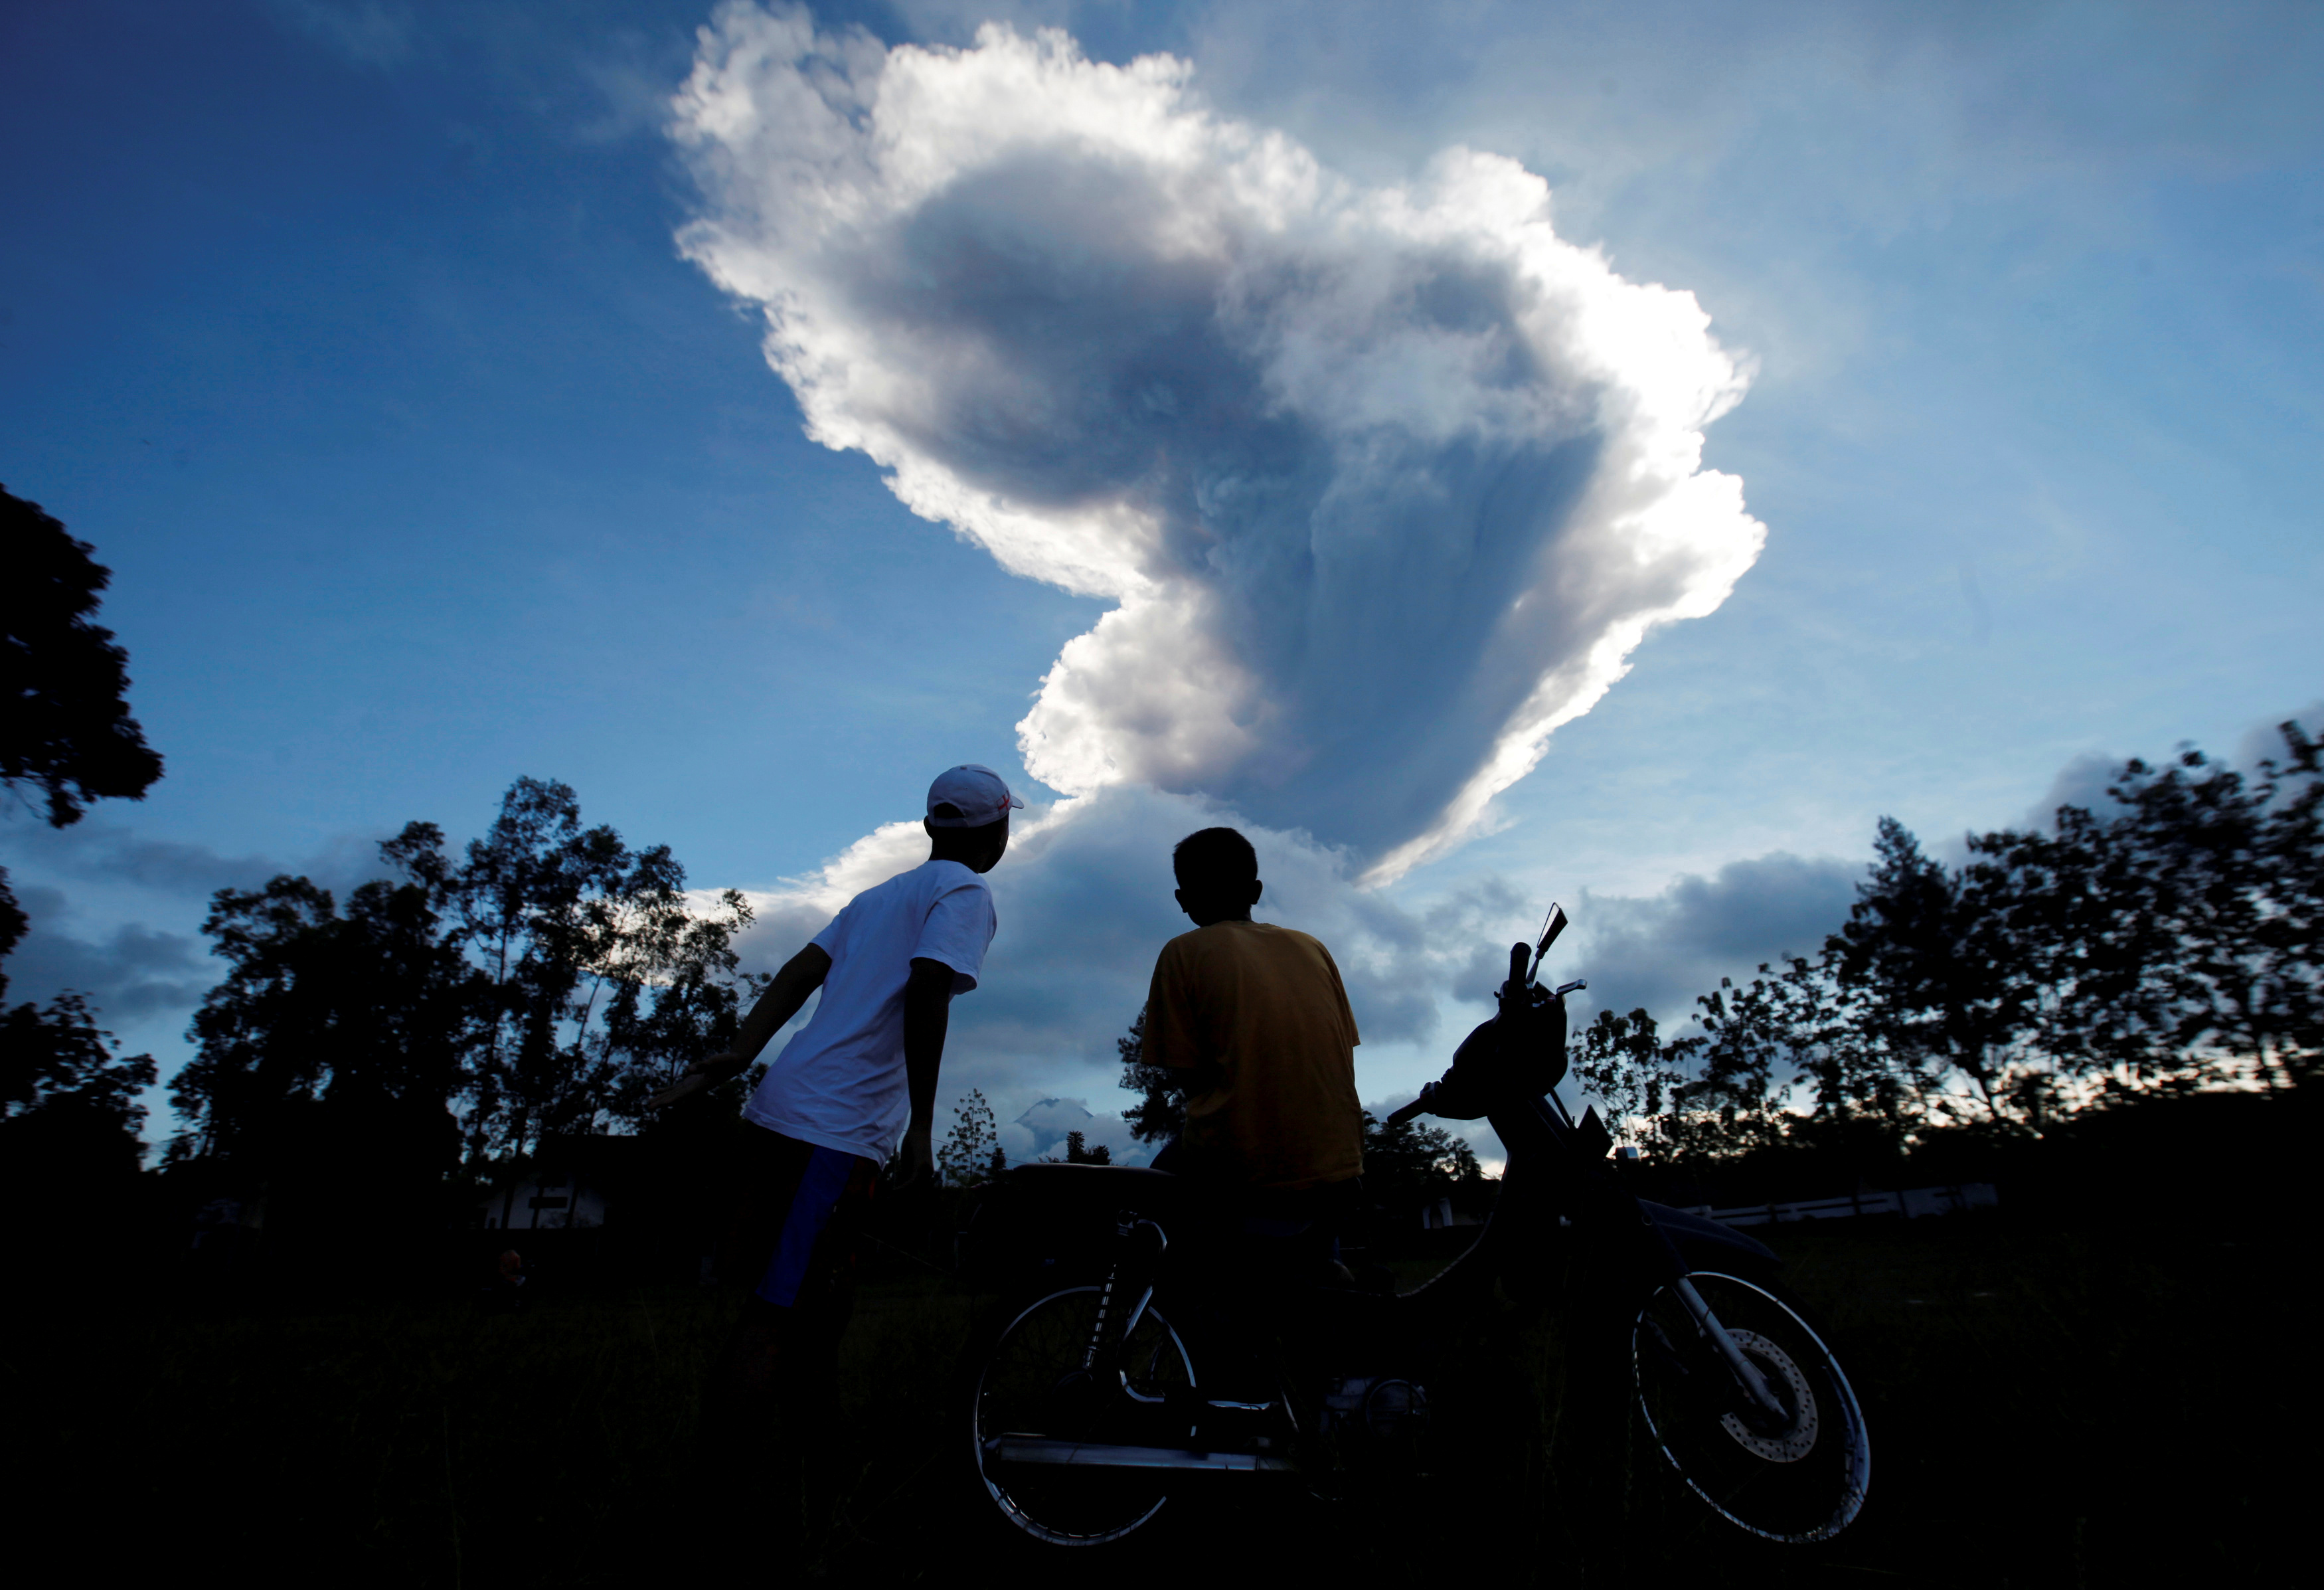 صور انبعاث دخان من بركان فى اندونيسيا (3)